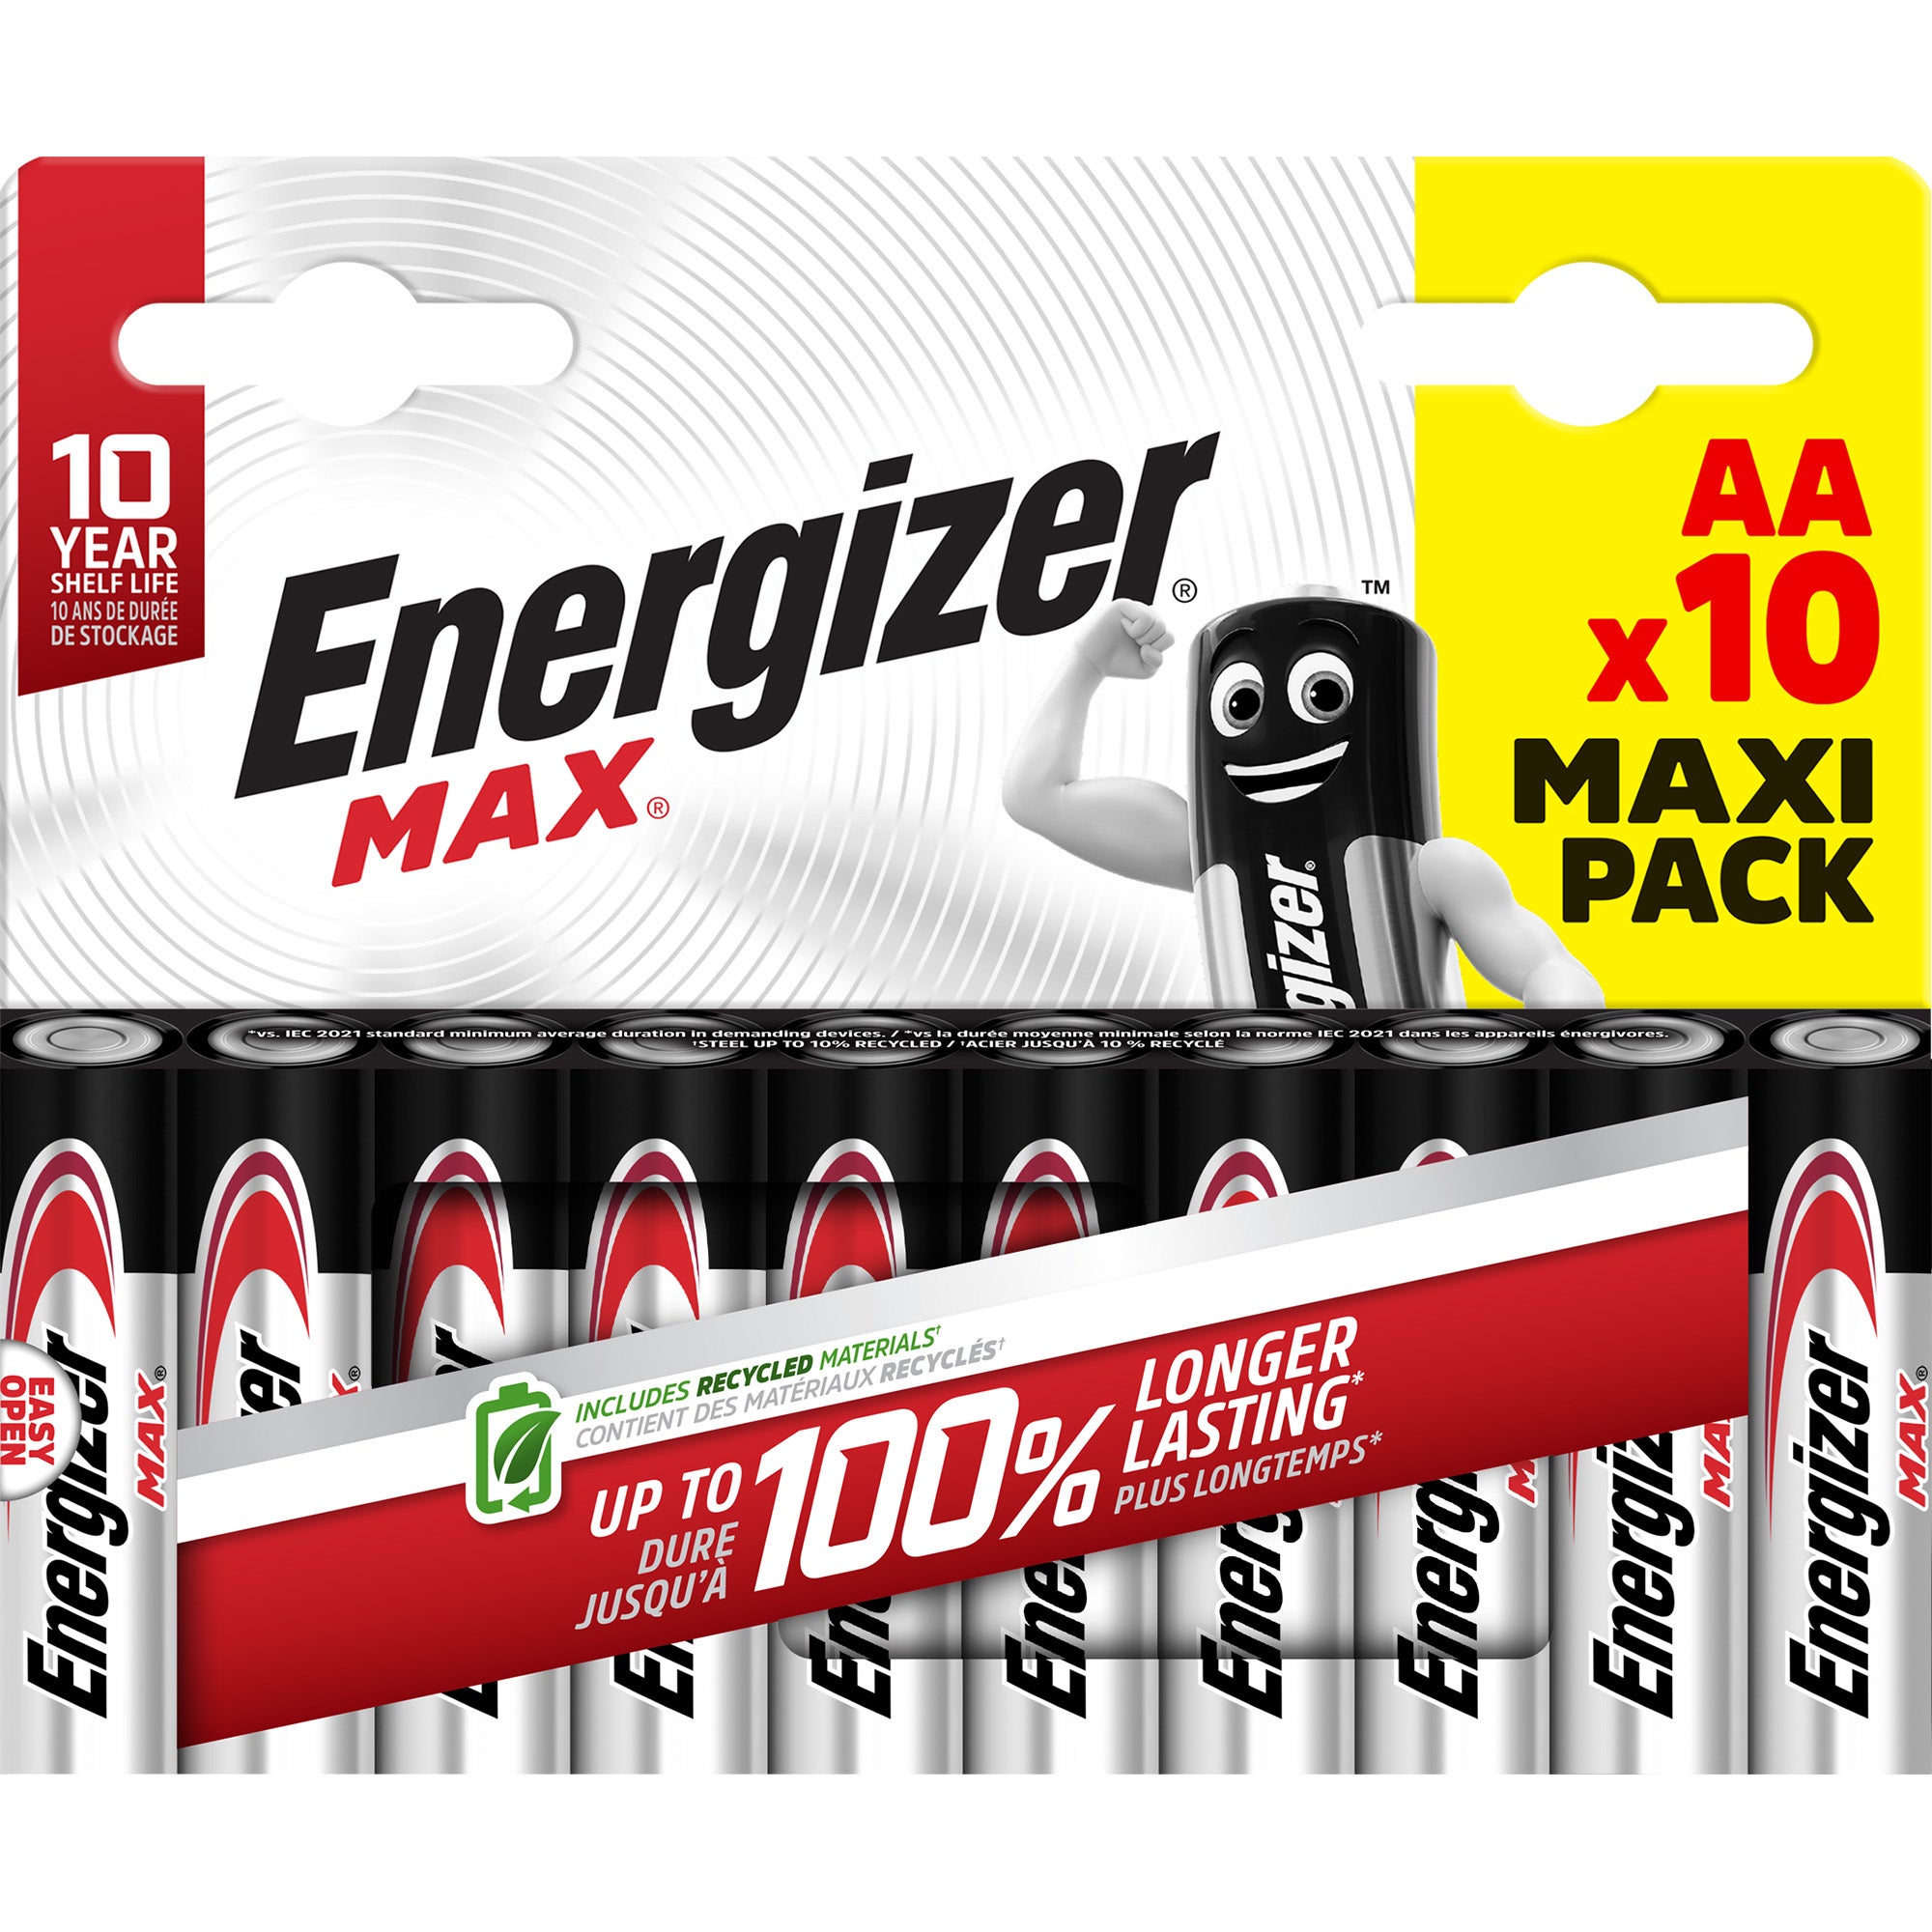 Energizer Max Pack of 10 AA Alkaline Batteries